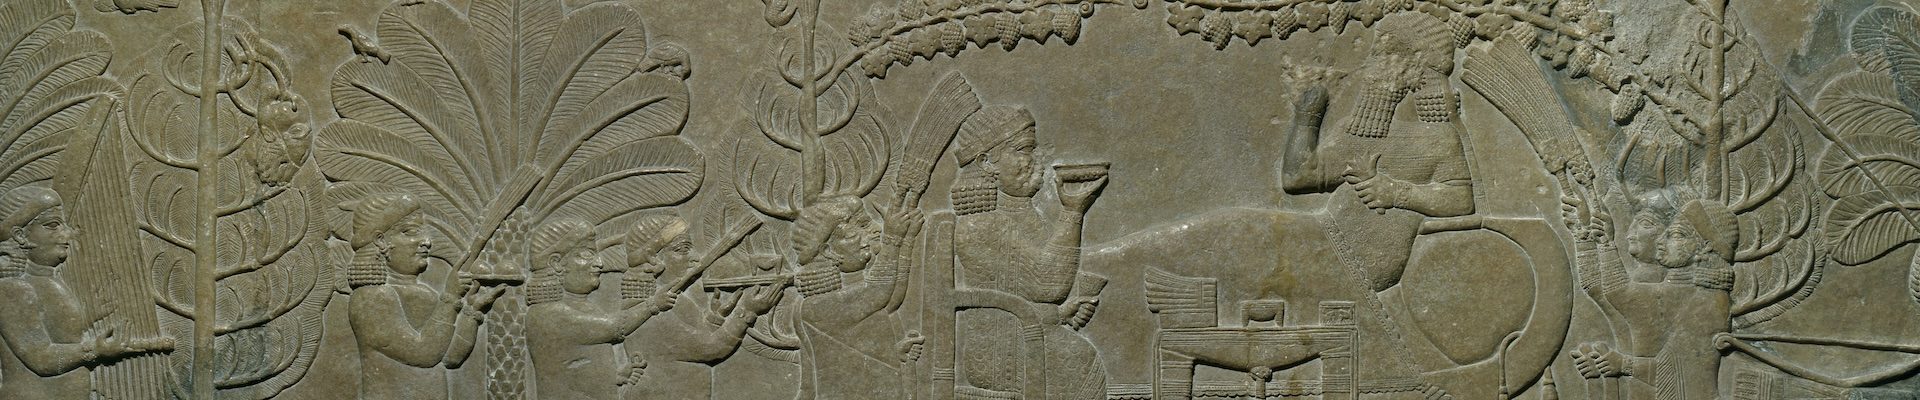 AshurbanipalGardenScene banner copy